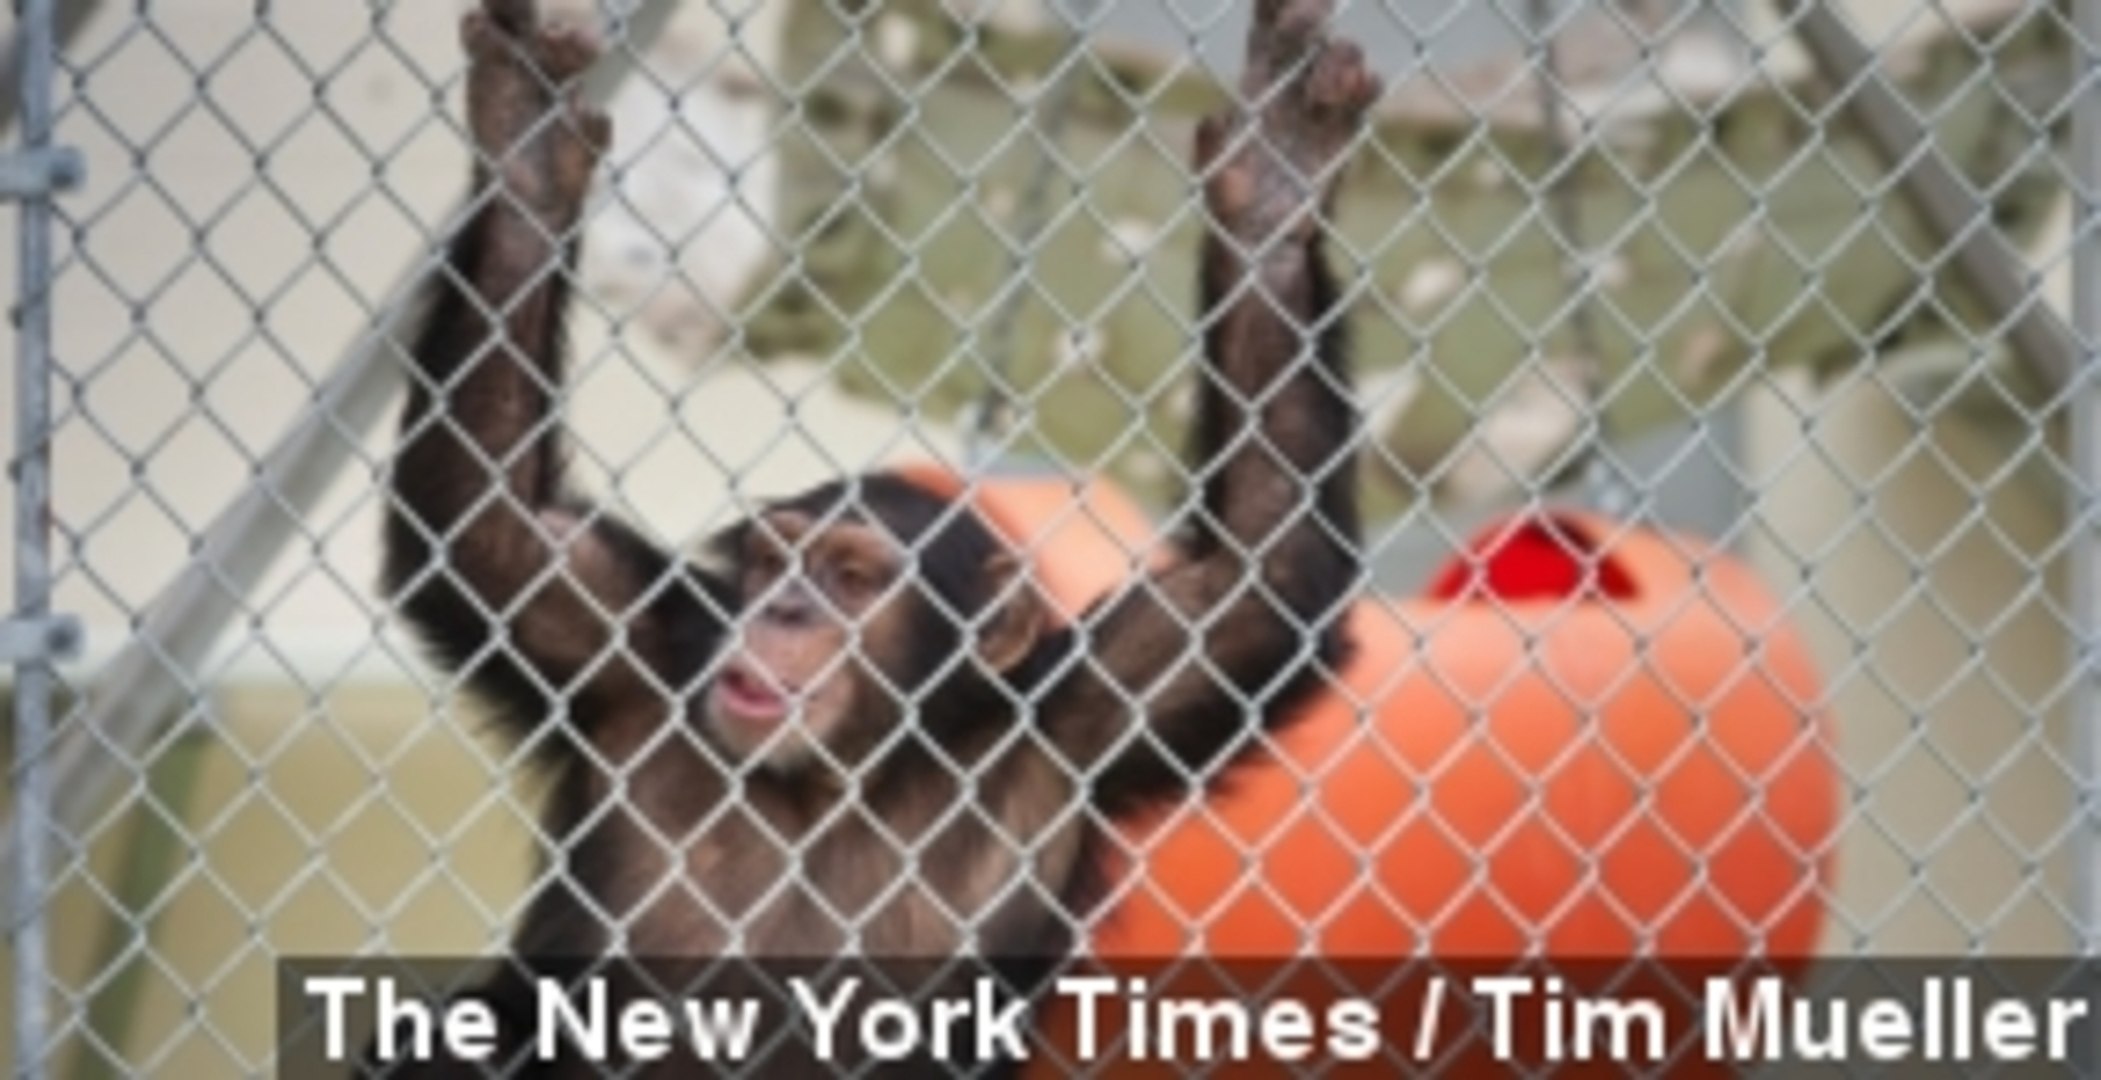 Chimpanzee Lawsuit Seeks Freedom, Personhood For Apes